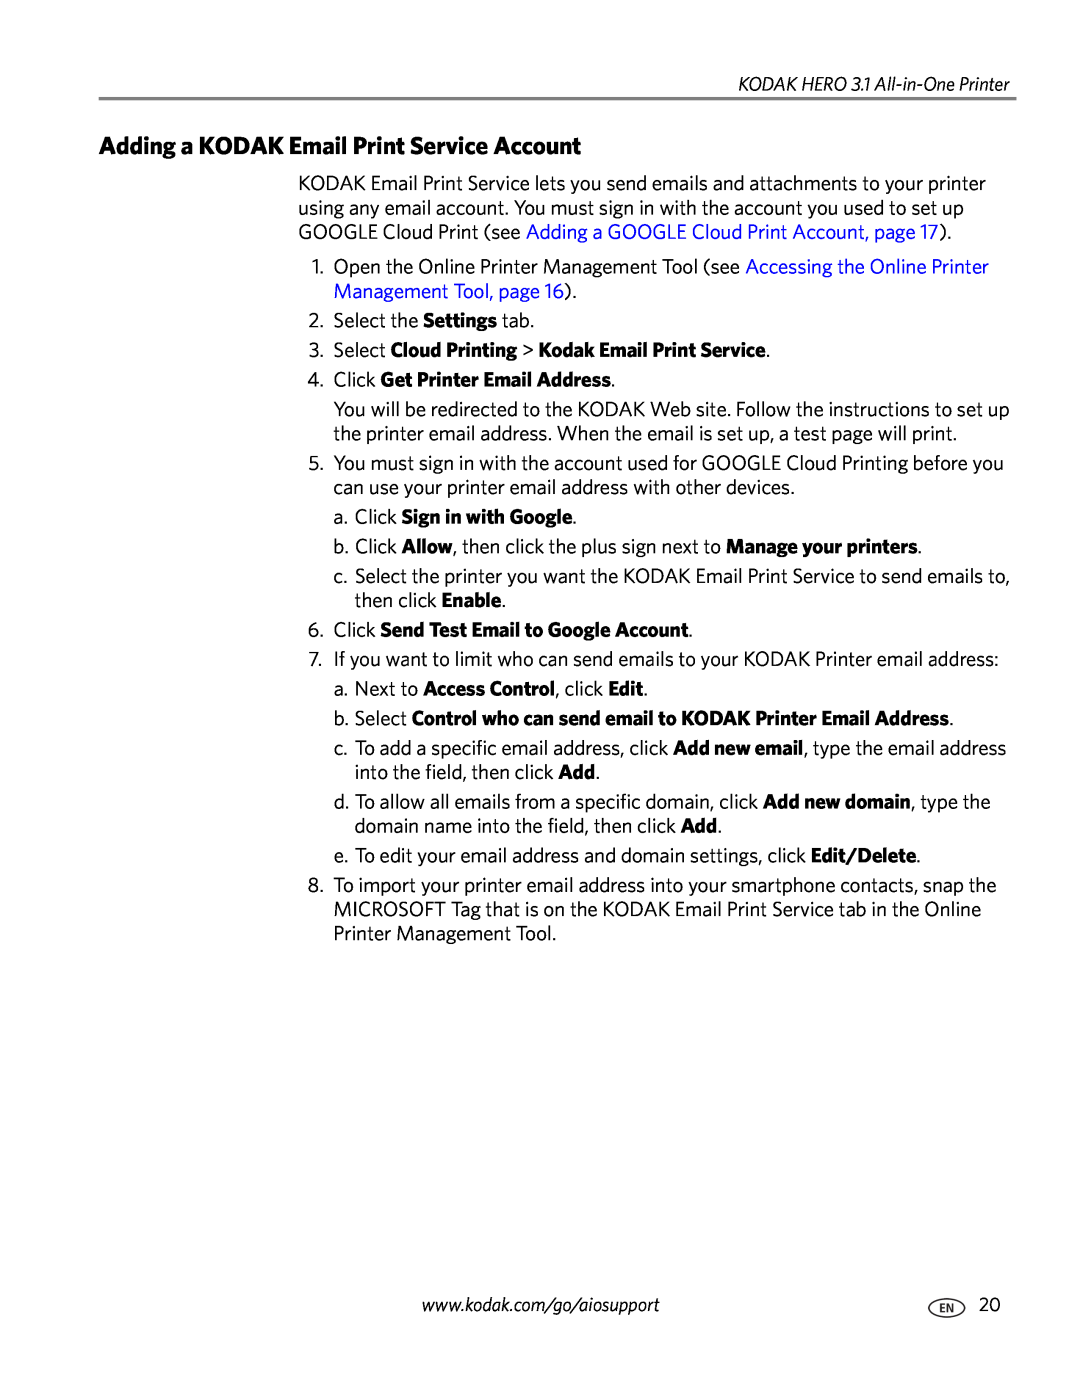 Kodak 3.1 manual Adding a KODAK Email Print Service Account, Select Cloud Printing Kodak Email Print Service 